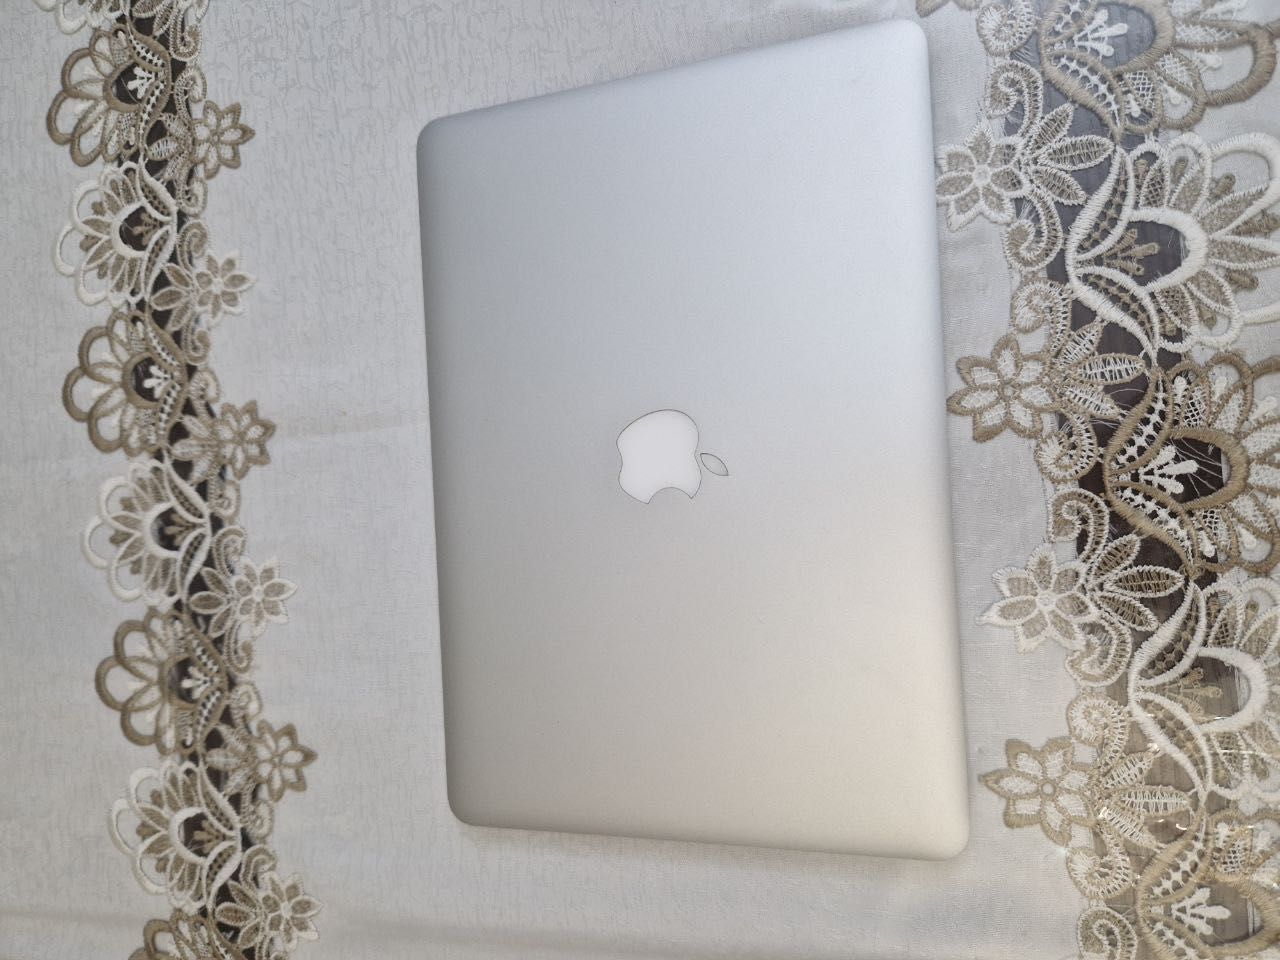 Macbook pro 13 (Retina, 13-inch, Early 2015)